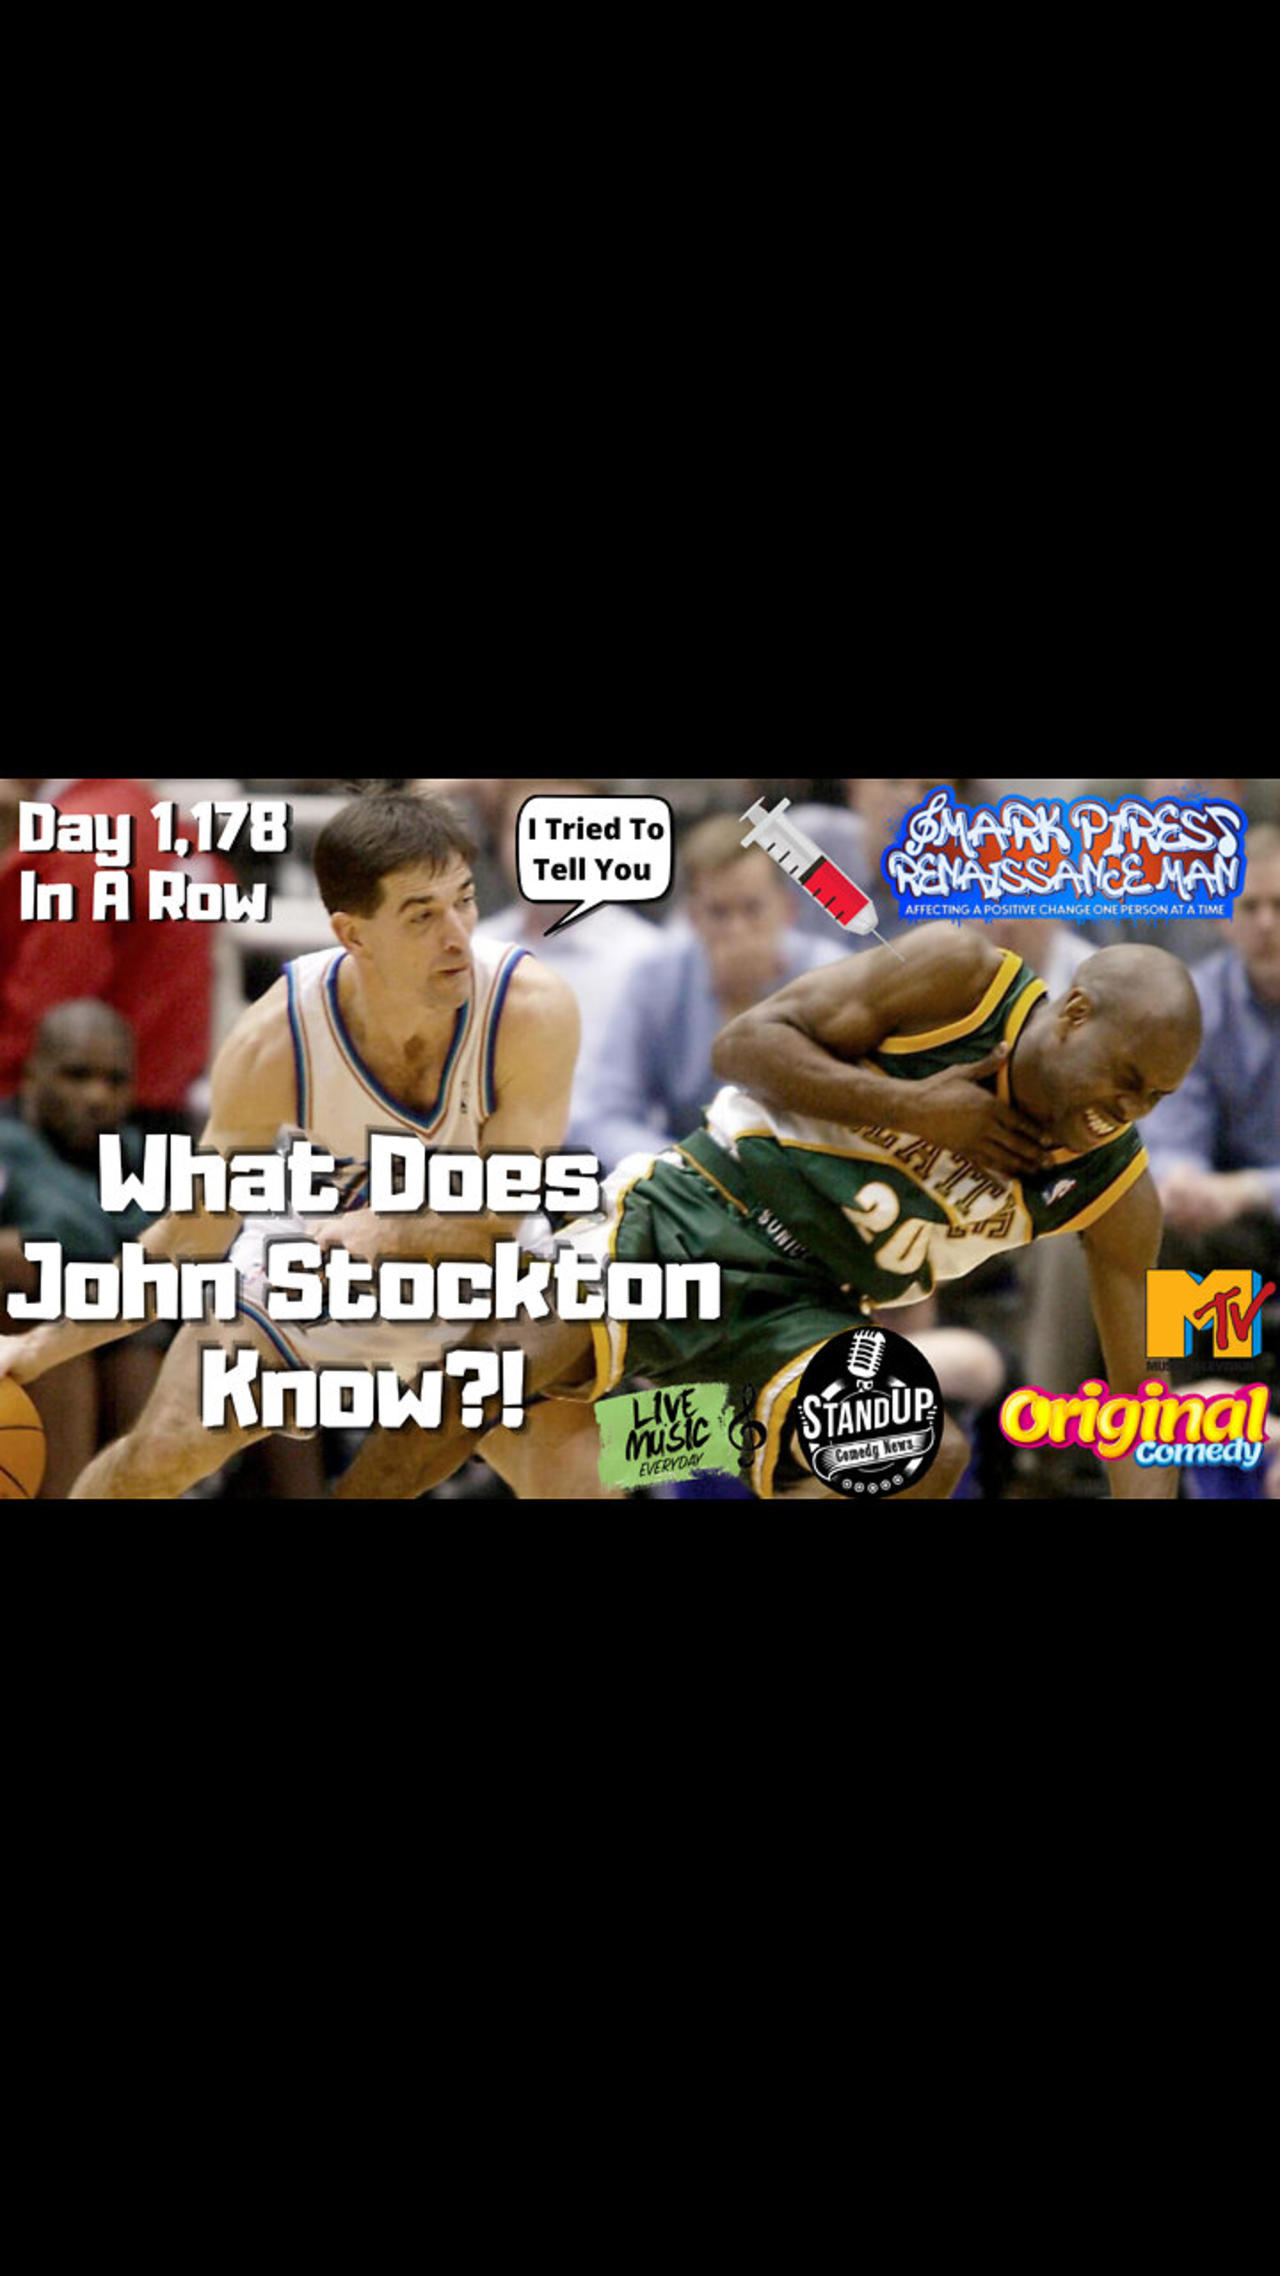 John Stockton's "Agenda" Jarring Claim About Athletes & The BugaBoo!😲🤔